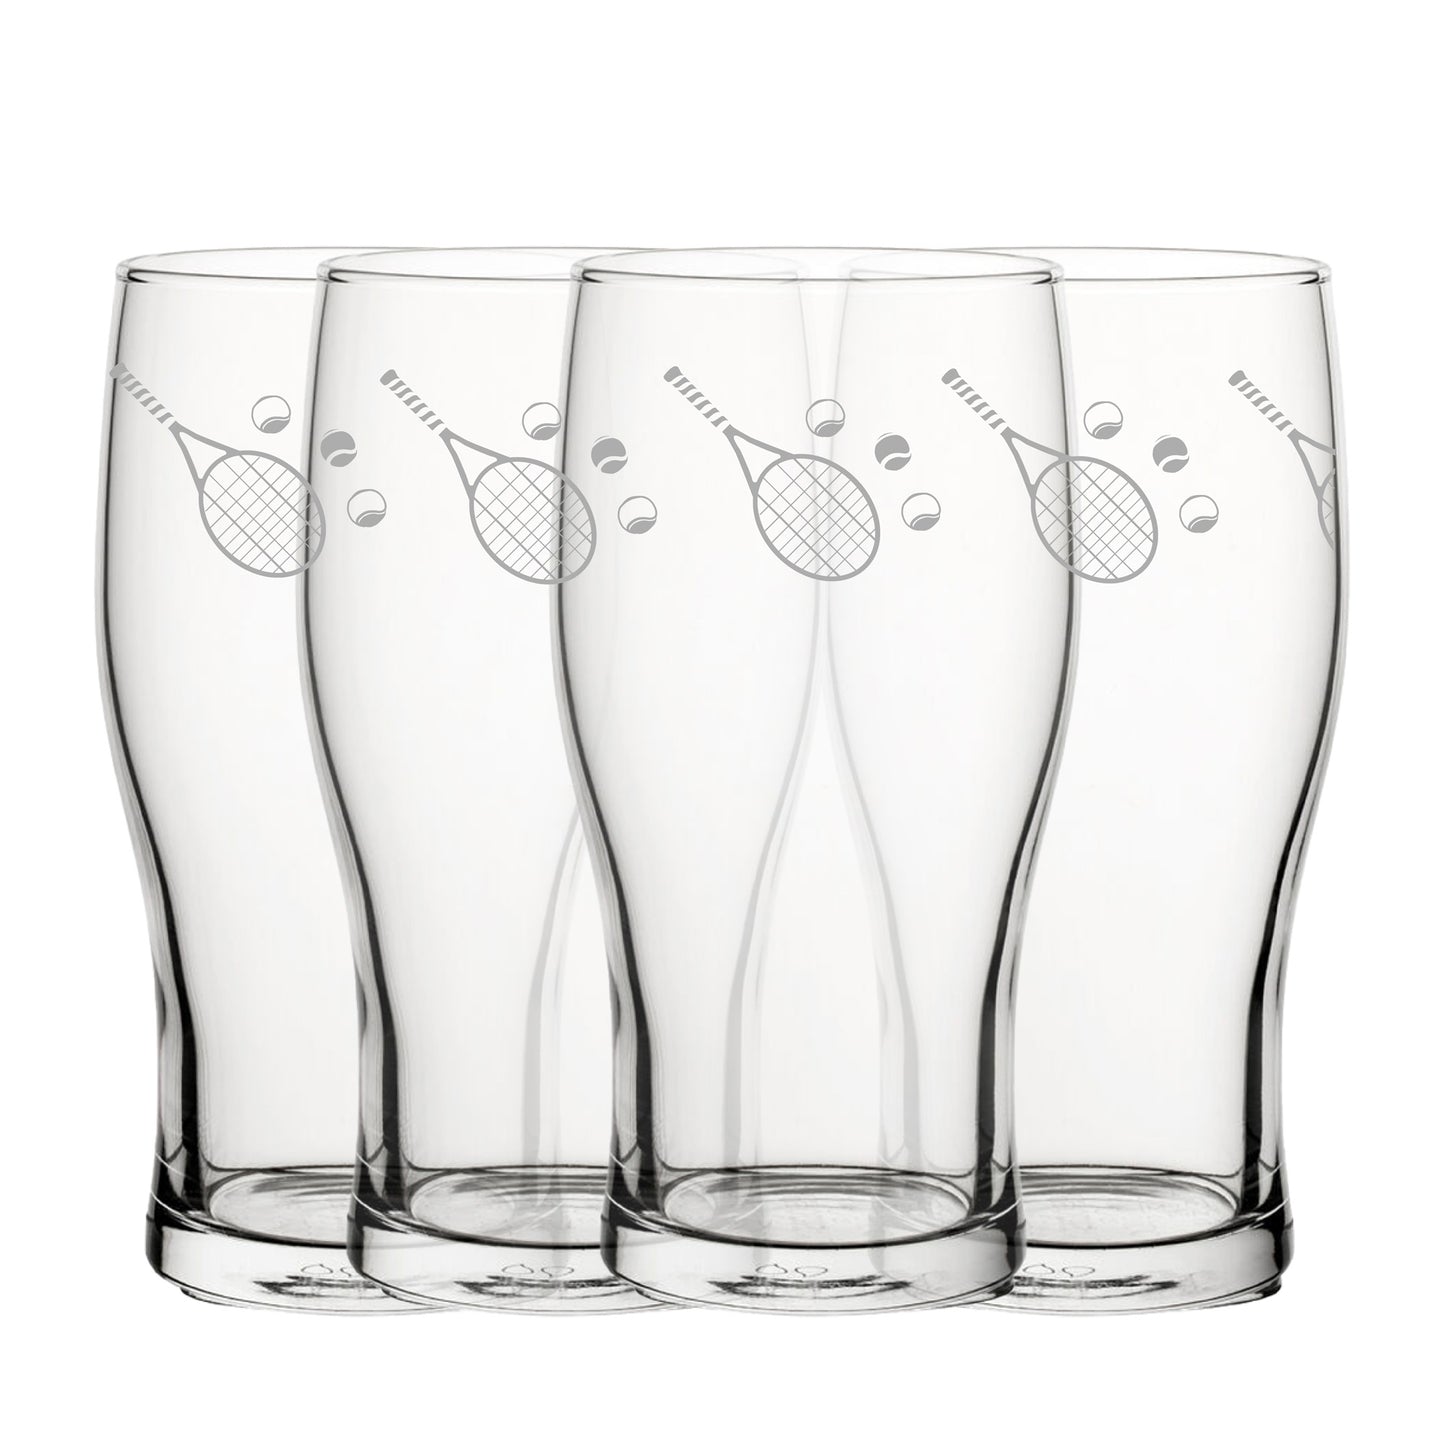 Engraved Tennis Pattern Pint Glass Set of 4, 20oz Tulip Glasses Image 2